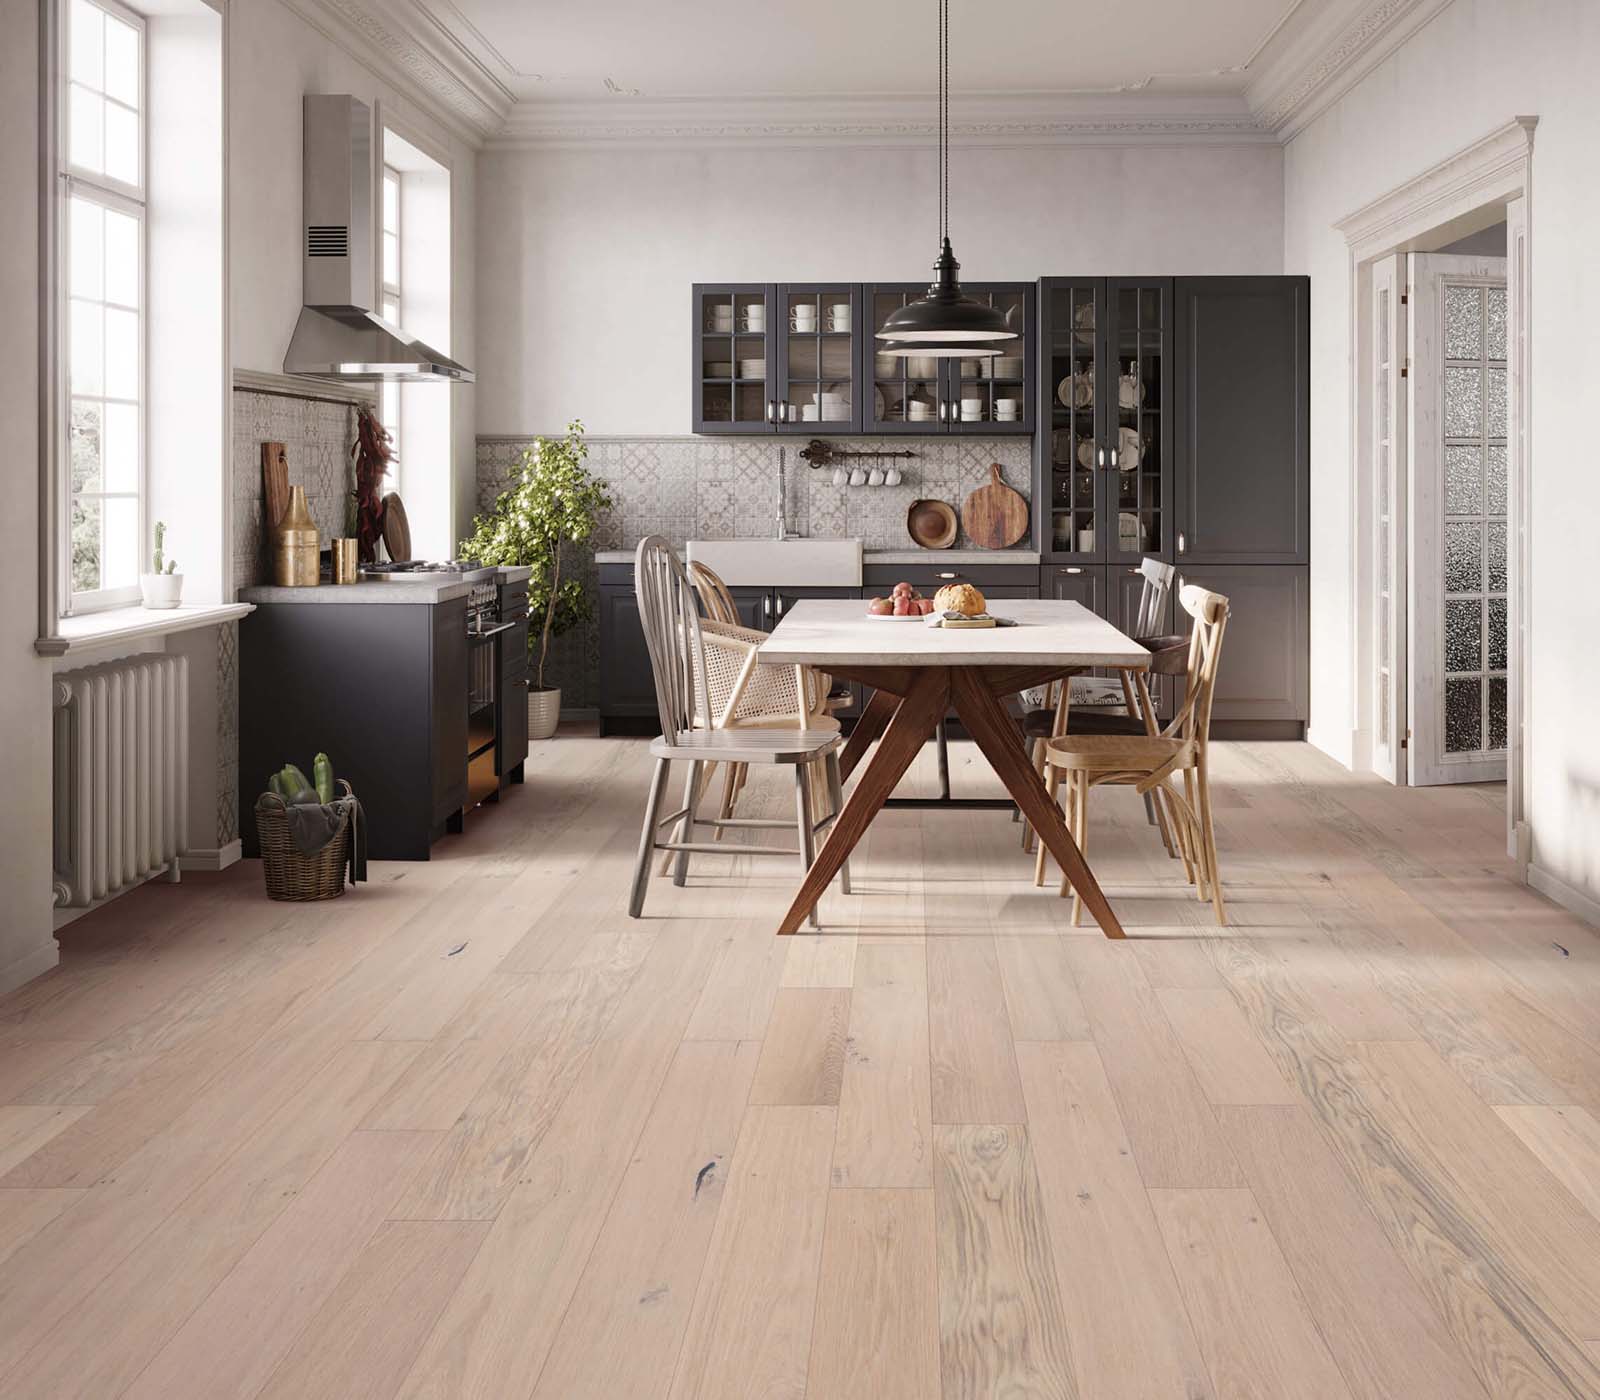 Hardwood flooring in kitchen | The L&L Company